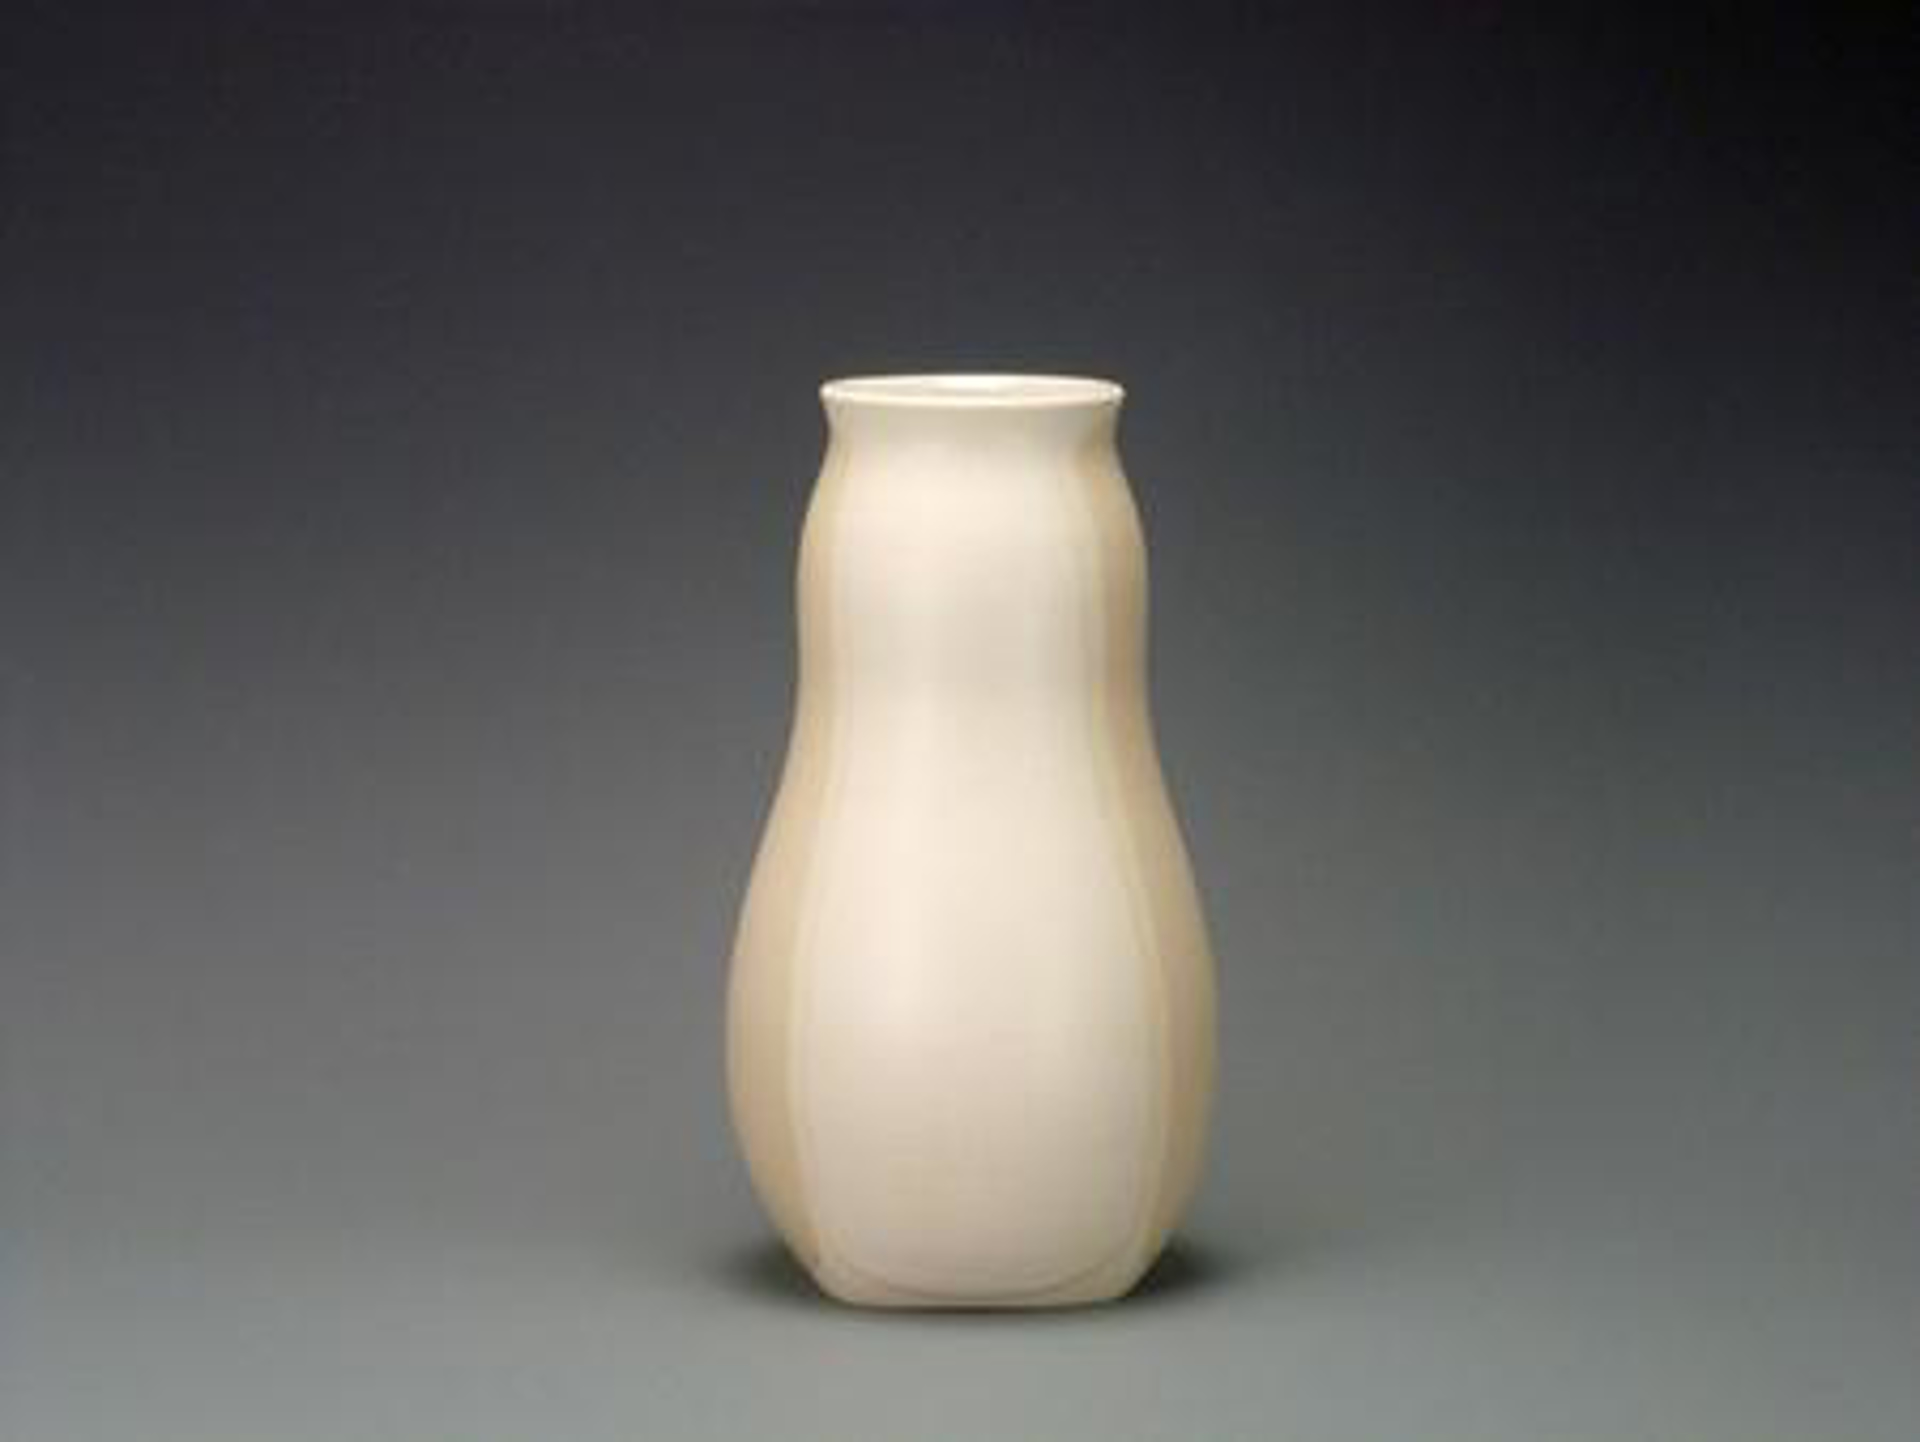 Four Panel Vase by Tara Dawley